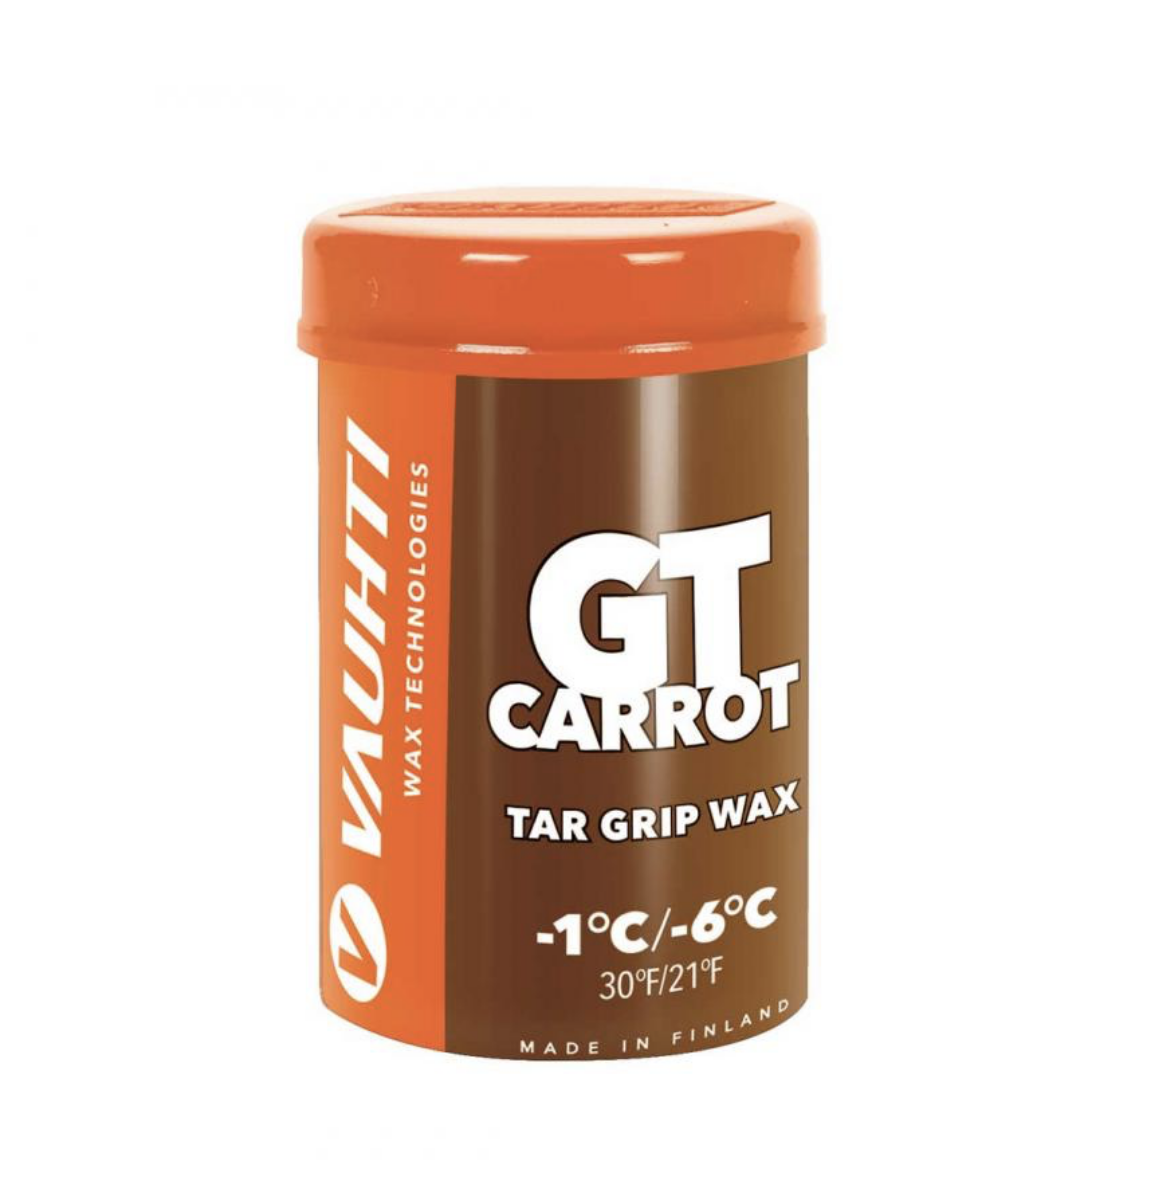 Bilde av Vauhti GT Carrot -1/-6 C Tar Grip Wax